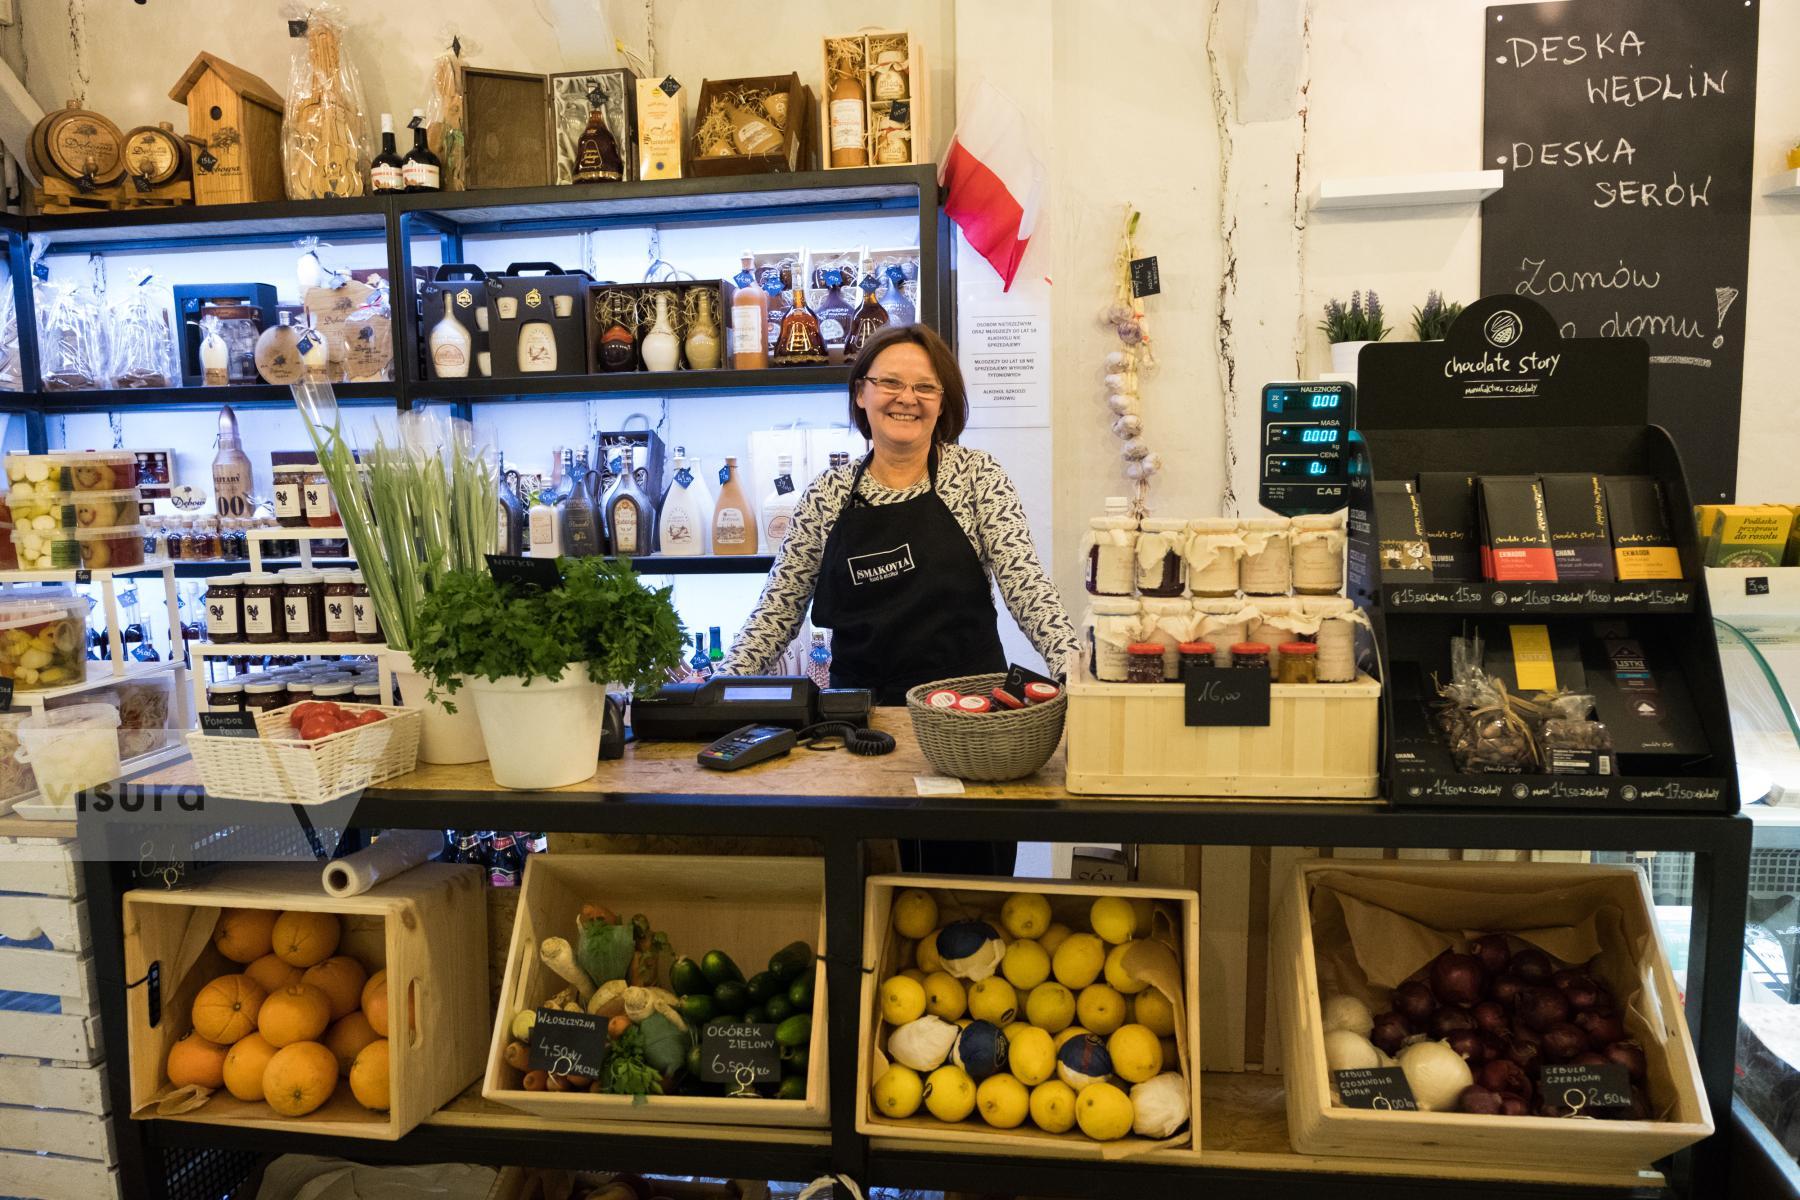 Purchase Woman in Grocery Shop by Hannah Kozak